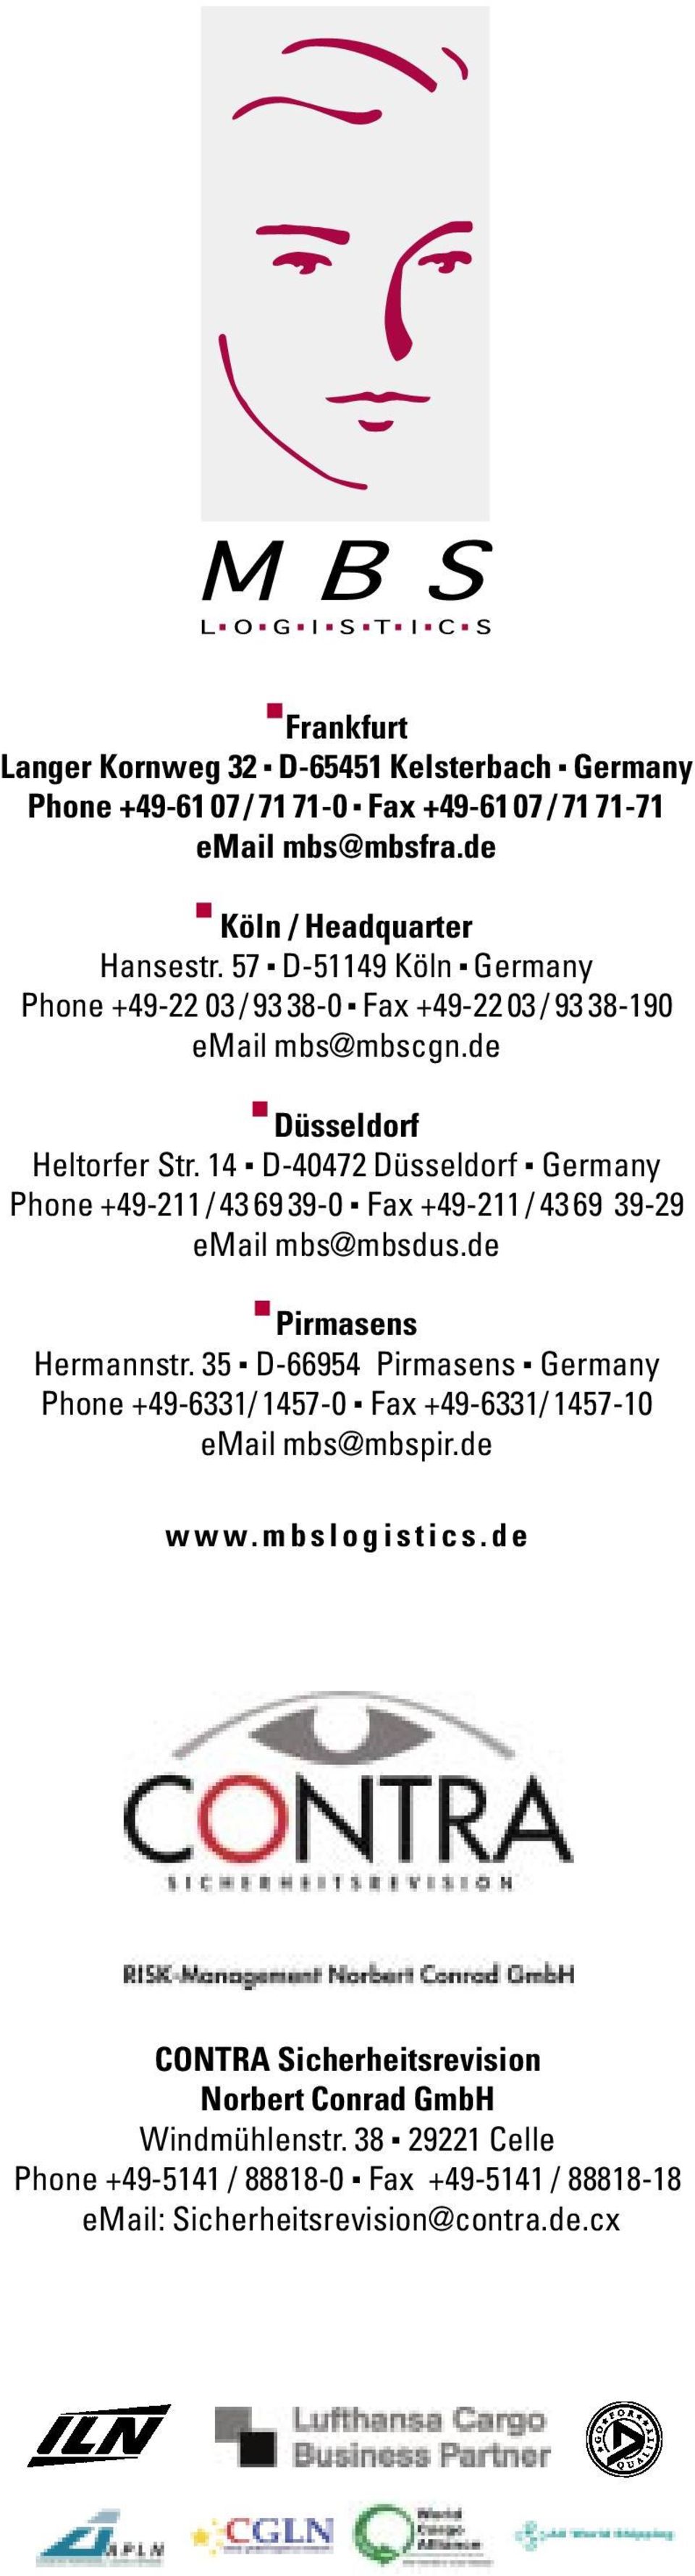 14 D-40472 Düsseldorf Germany Phone +49-211 / 43 69 39-0 Fax +49-211 / 43 69 39-29 email mbs@mbsdus.de Pirmasens Hermannstr.